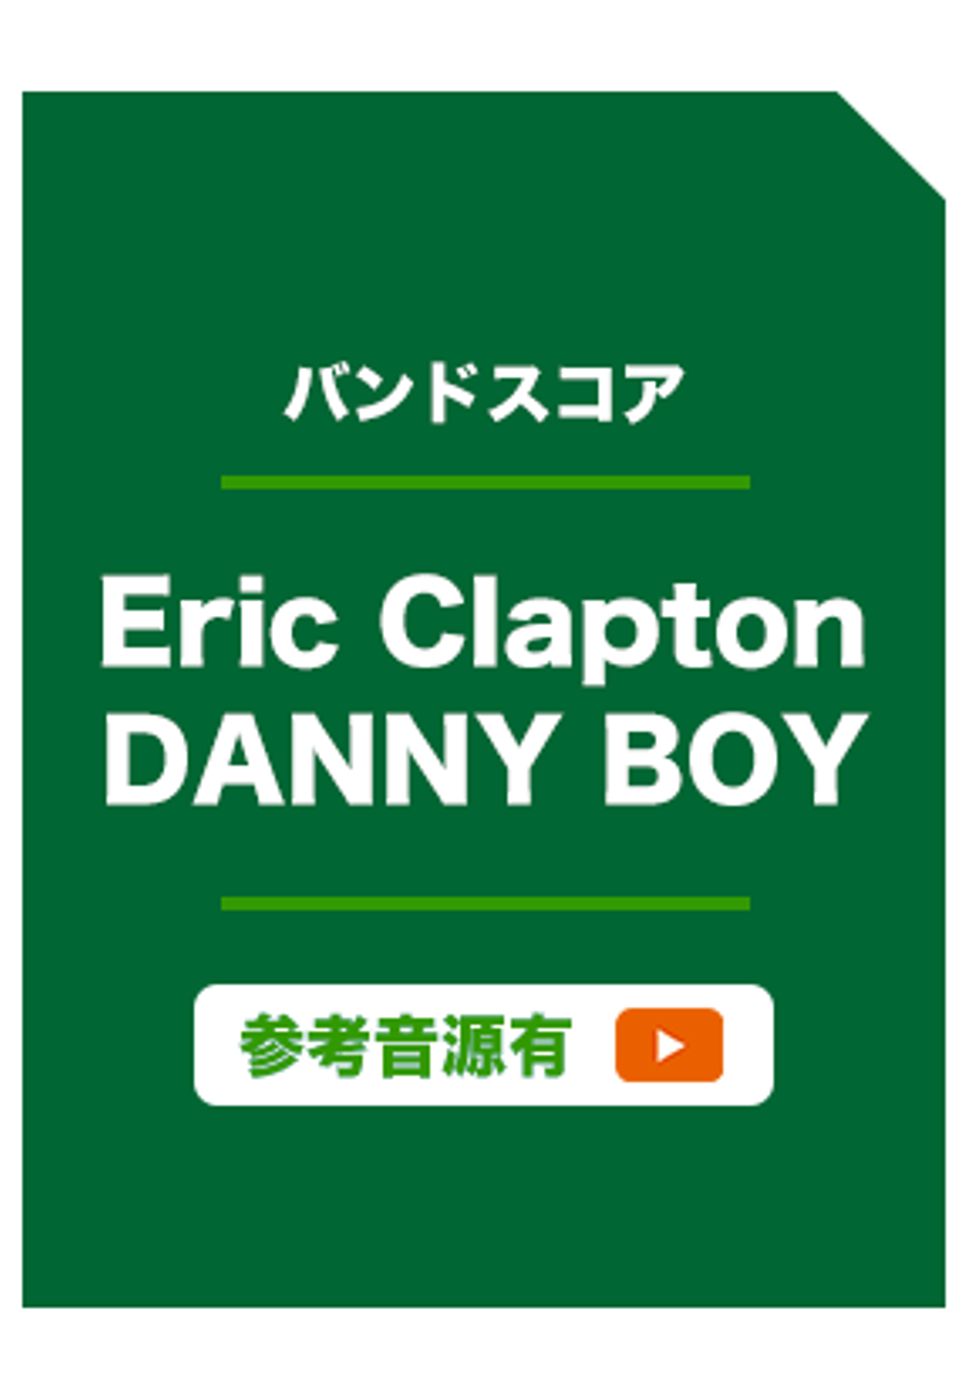 DANNY BOY (ギターソロ、ギター伴奏、ドラム) by Eric Clapton